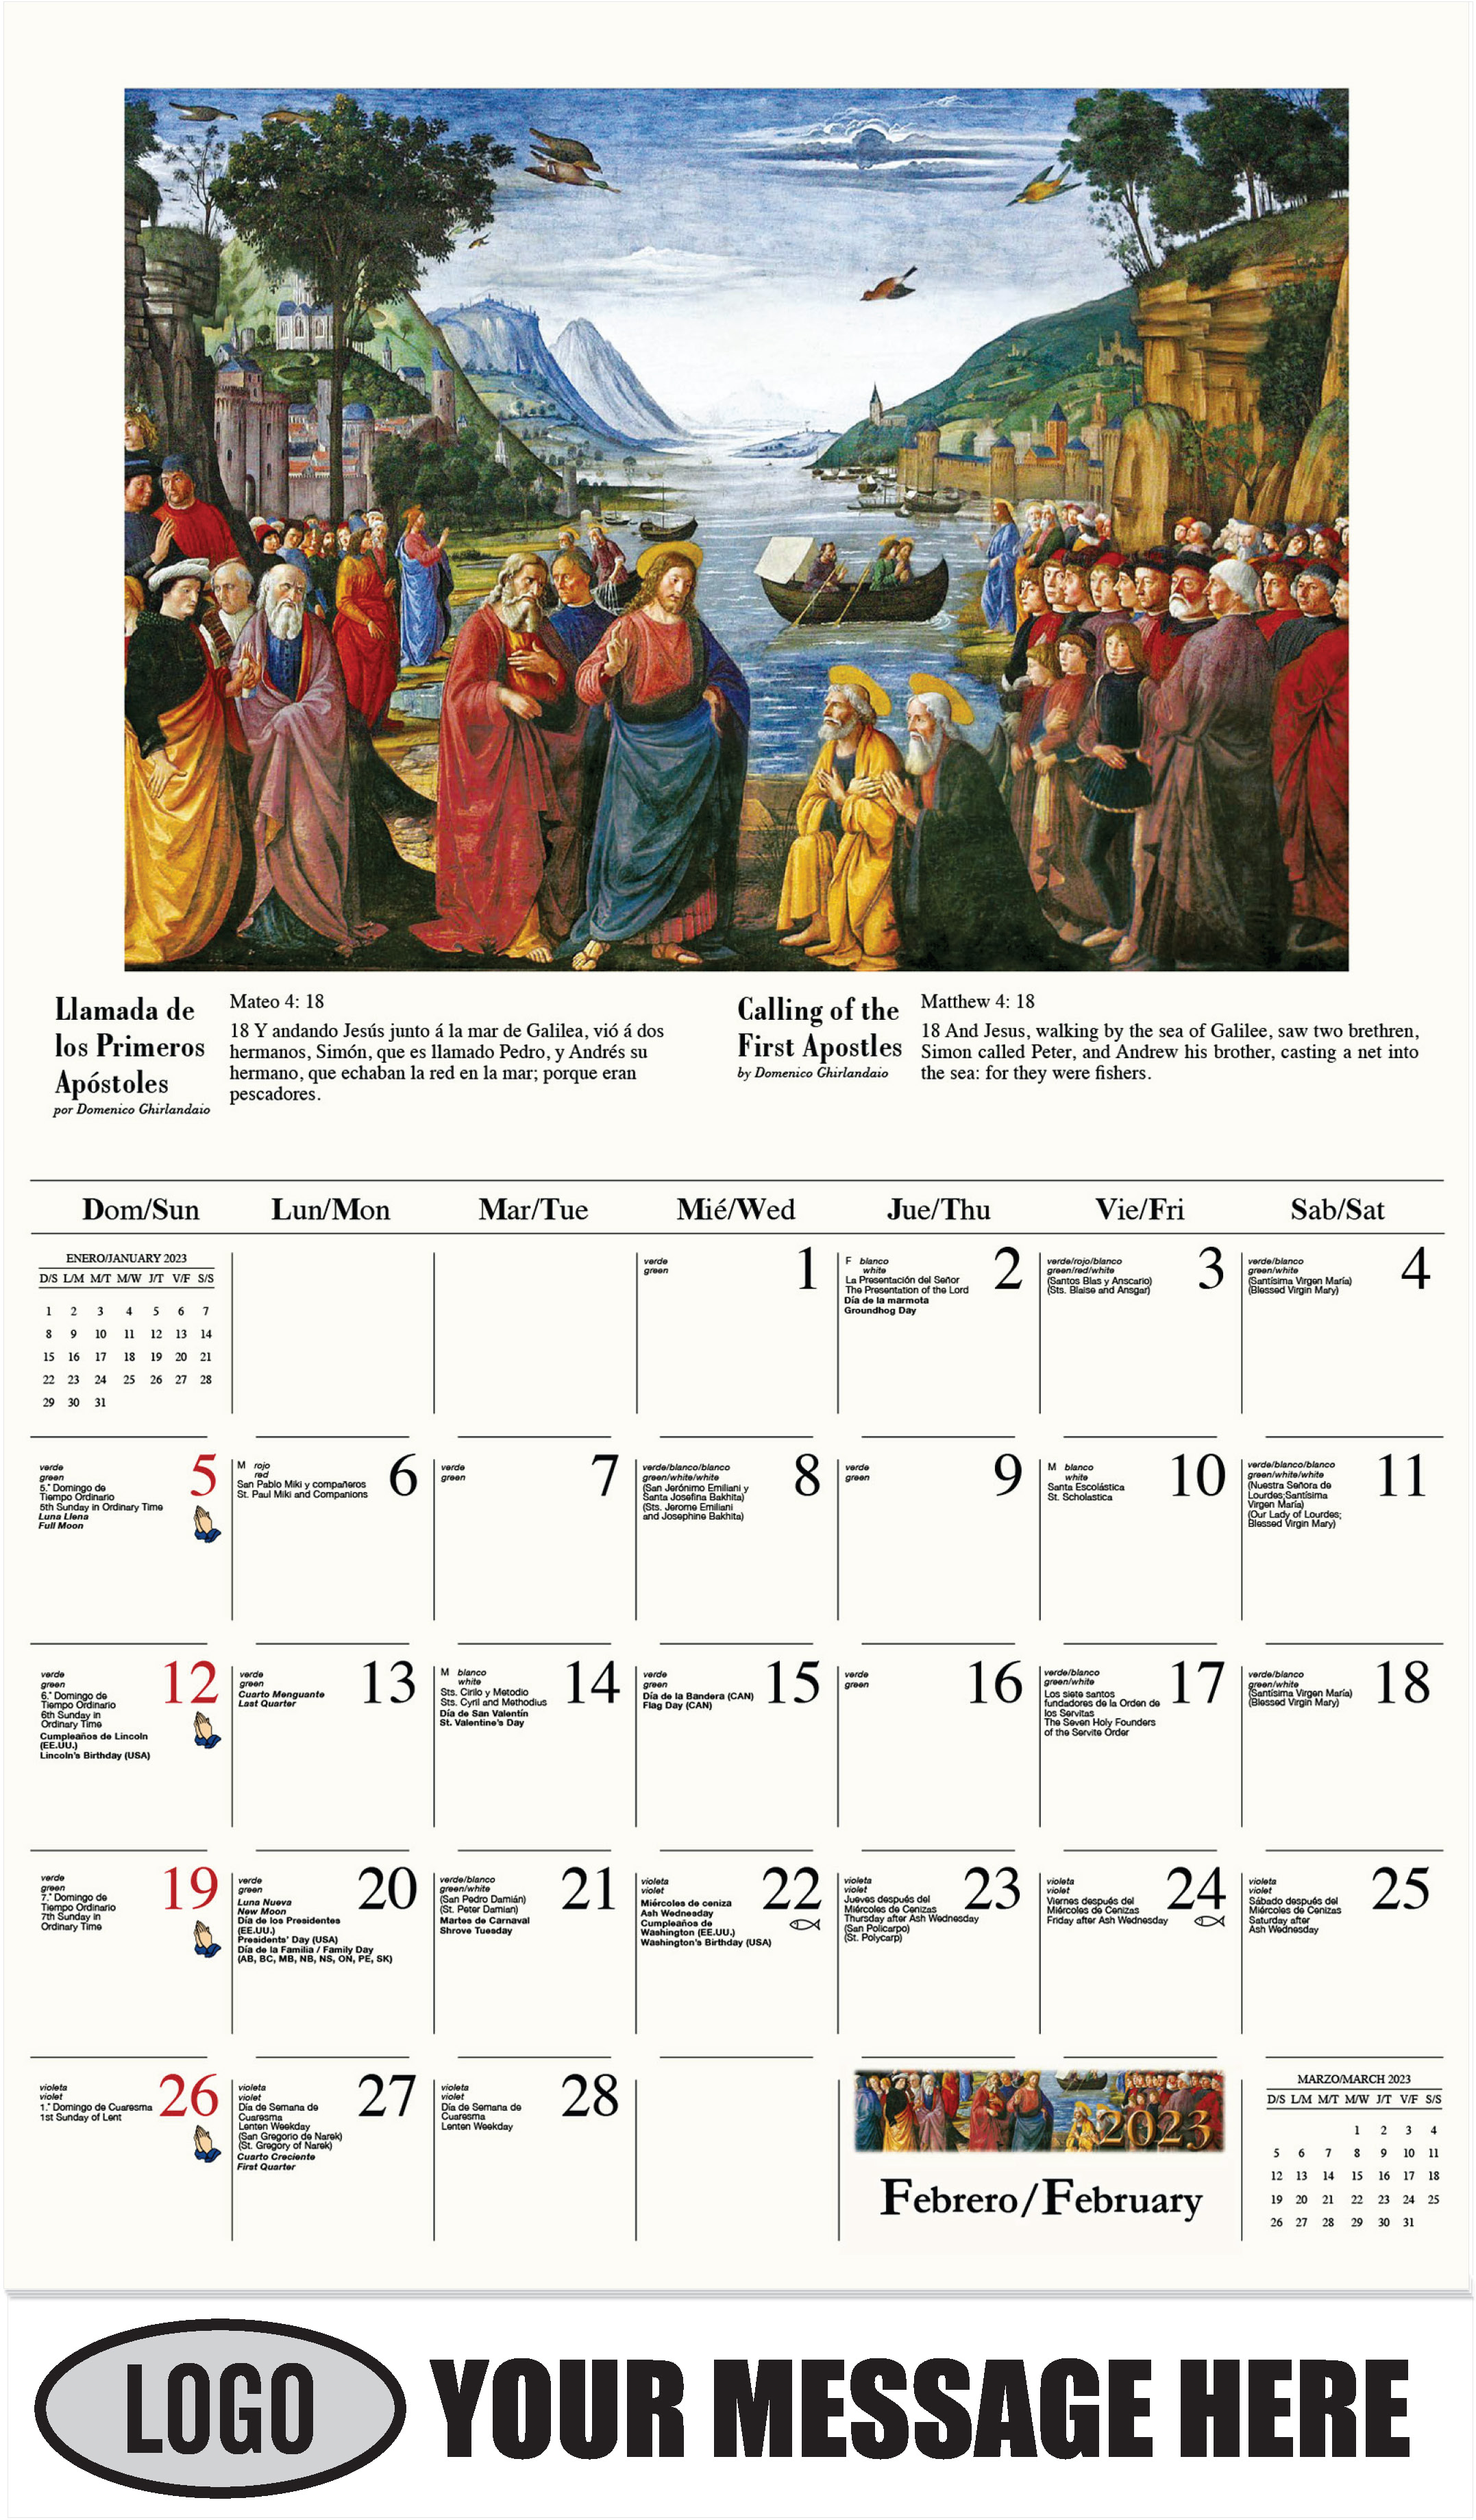 Llamada de los Primeros Apóstoles por Domenico Ghirlandaio - February - Catholic Inspiration (Spanish-English bilingual) 2023 Promotional Calendar